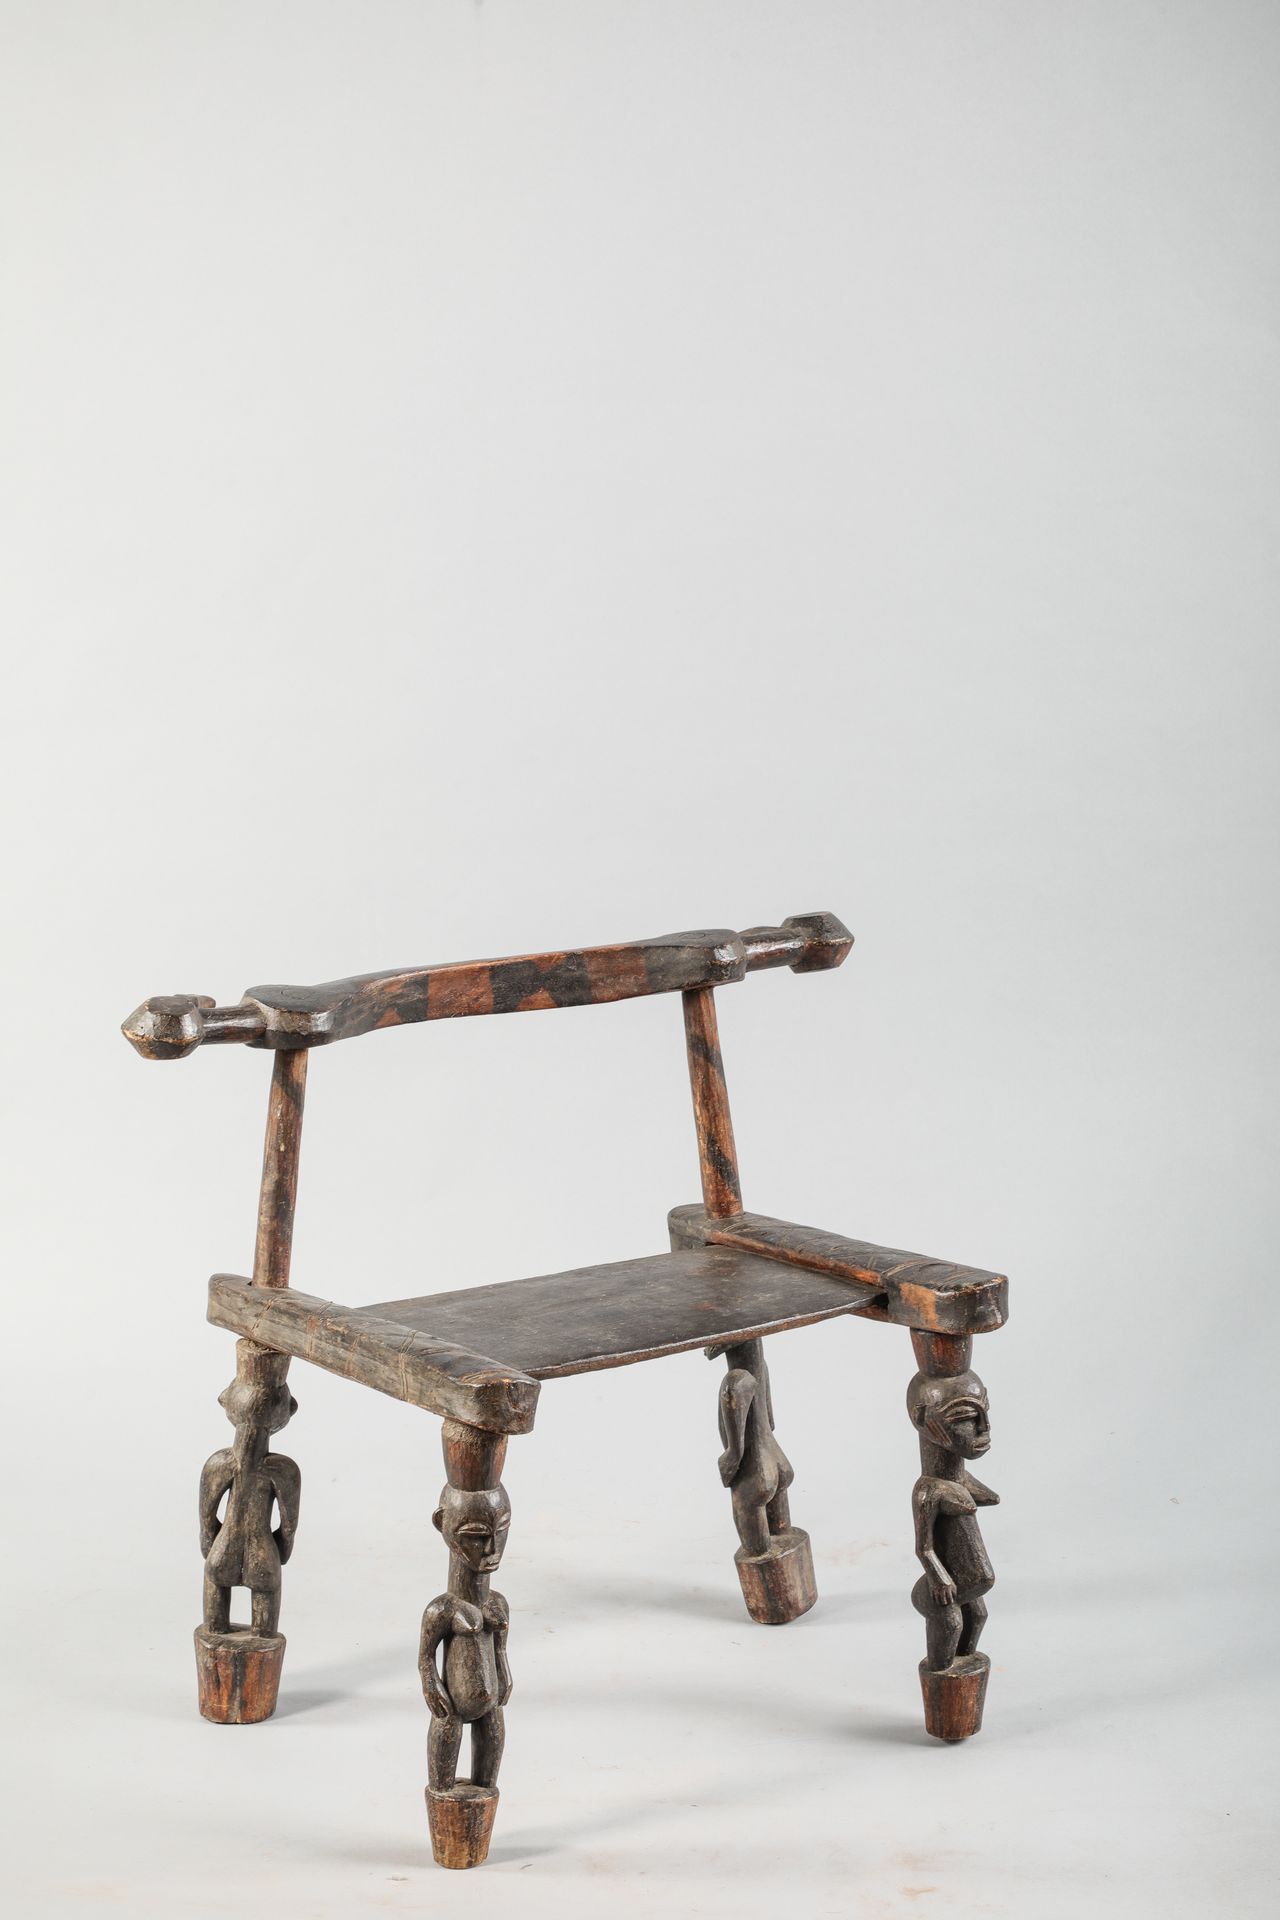 Null 传统的塞努弗座椅，象牙海岸，腿上雕刻着女性和男性的形象，靠背的两端是犀鸟的头部形状，侧面有雕刻的线条装饰。


具有棕黑色漆面的木材


高度63厘米